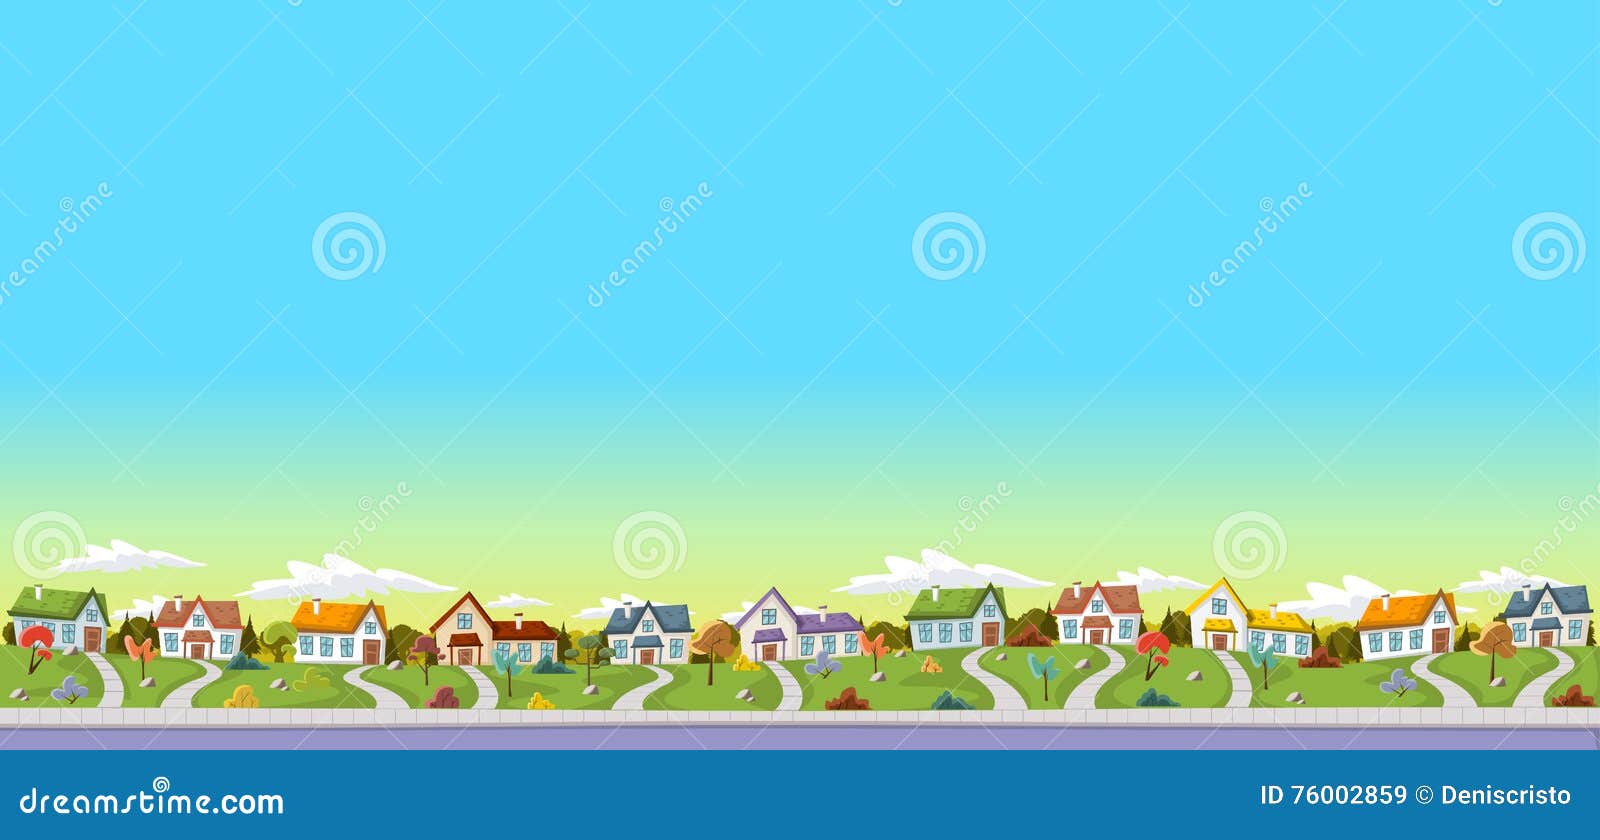 colorful houses in suburb neighborhood.